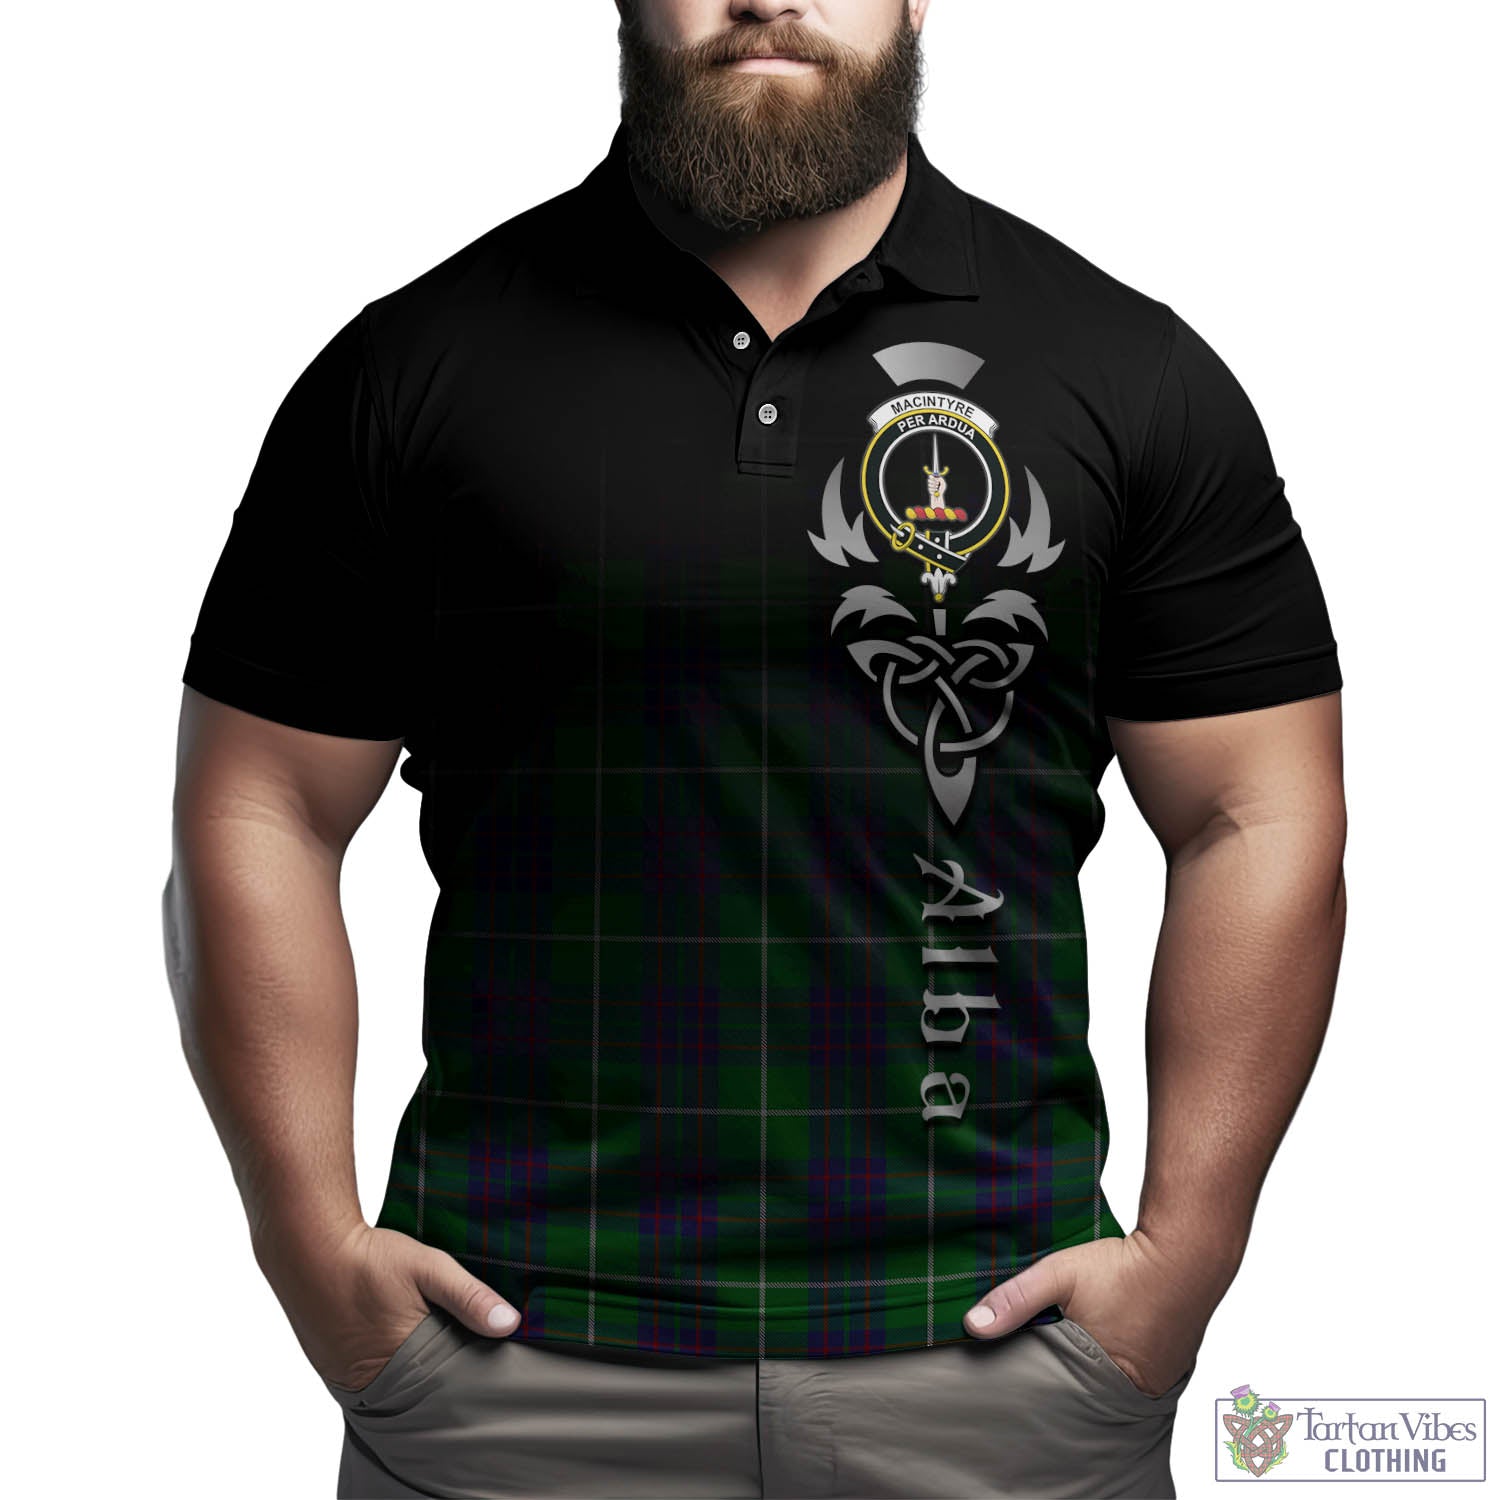 Tartan Vibes Clothing MacIntyre Hunting Tartan Polo Shirt Featuring Alba Gu Brath Family Crest Celtic Inspired